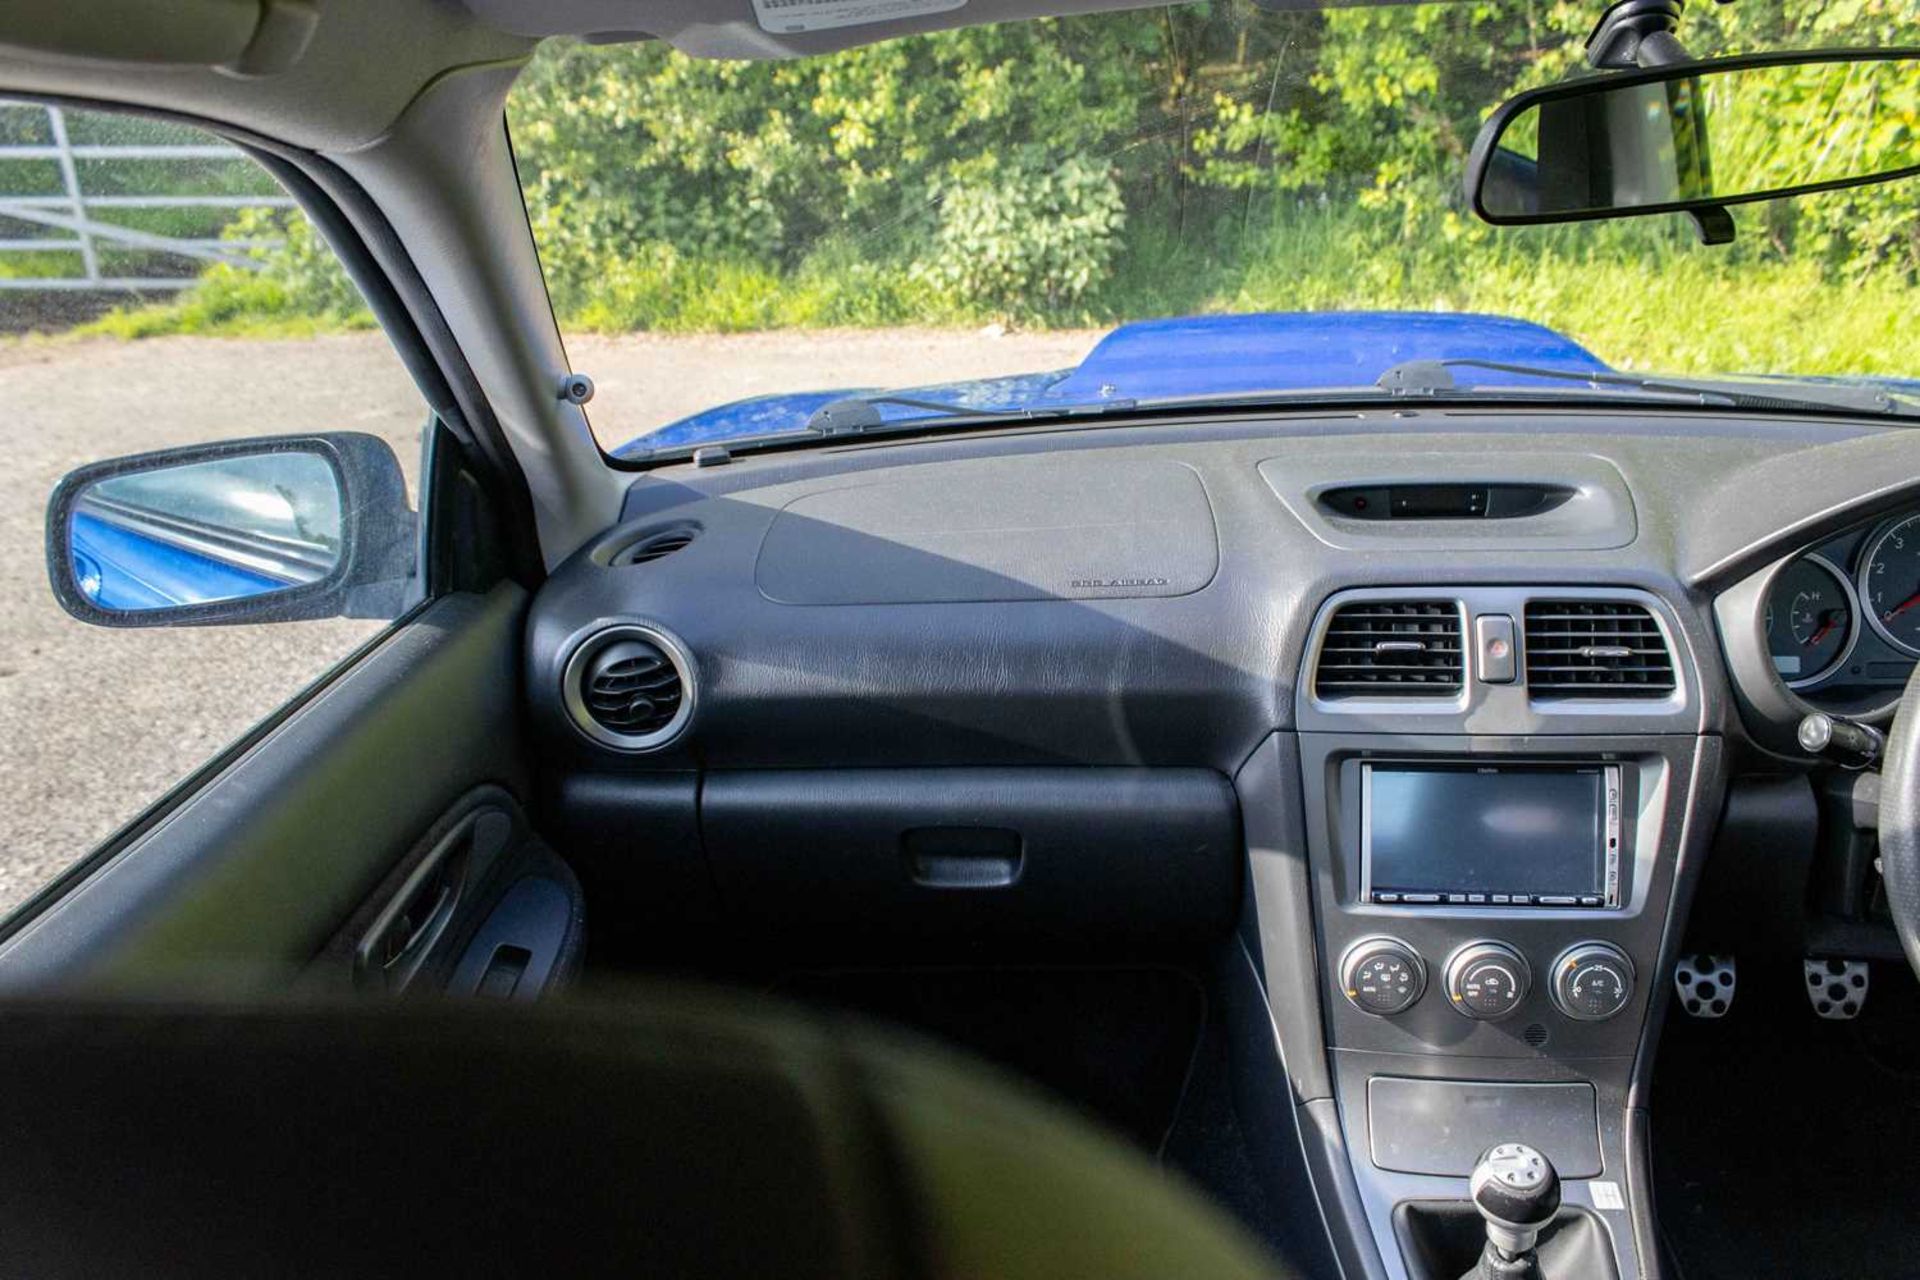 2007 Subaru Impreza GB270 - Image 53 of 86